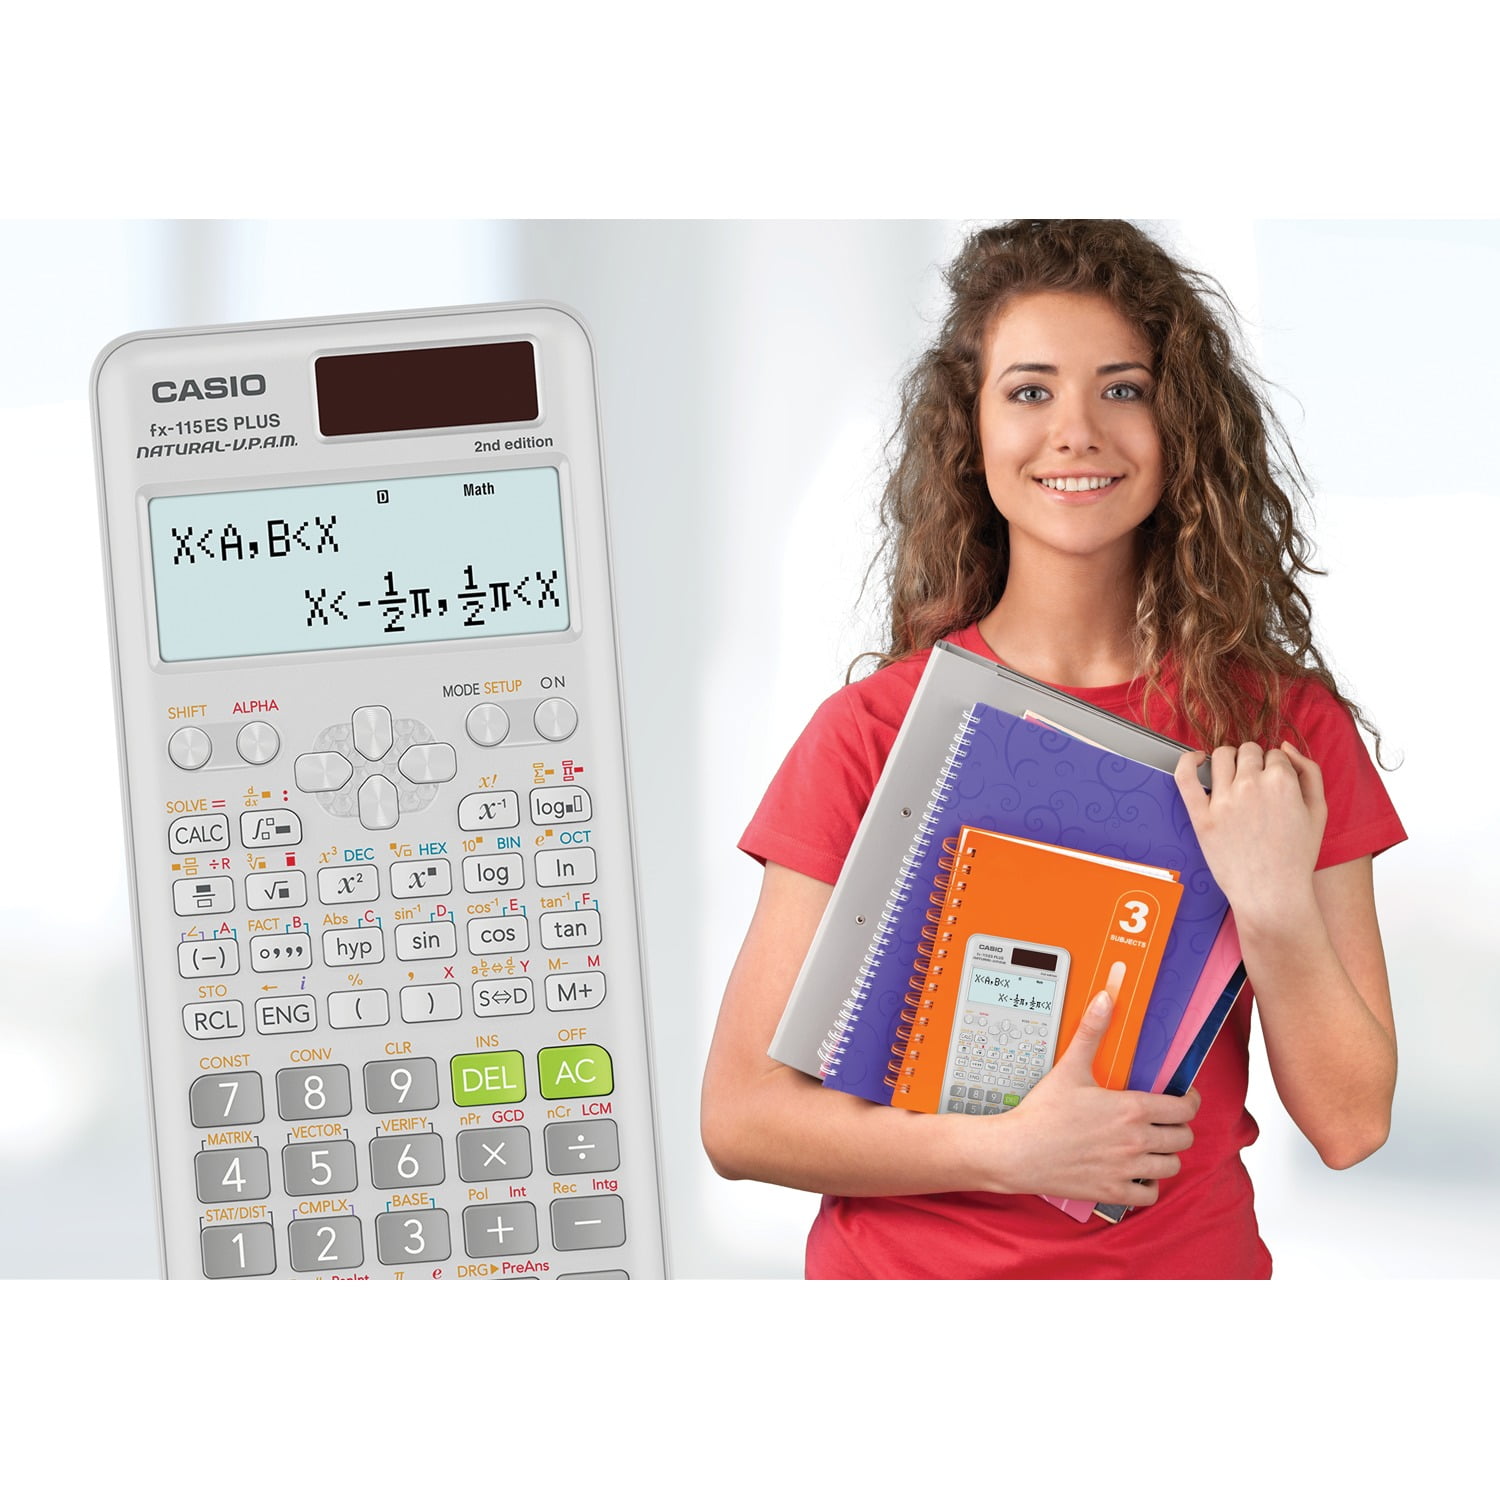 Casio Scientific Calculator, Textbook Display, White Walmart.com